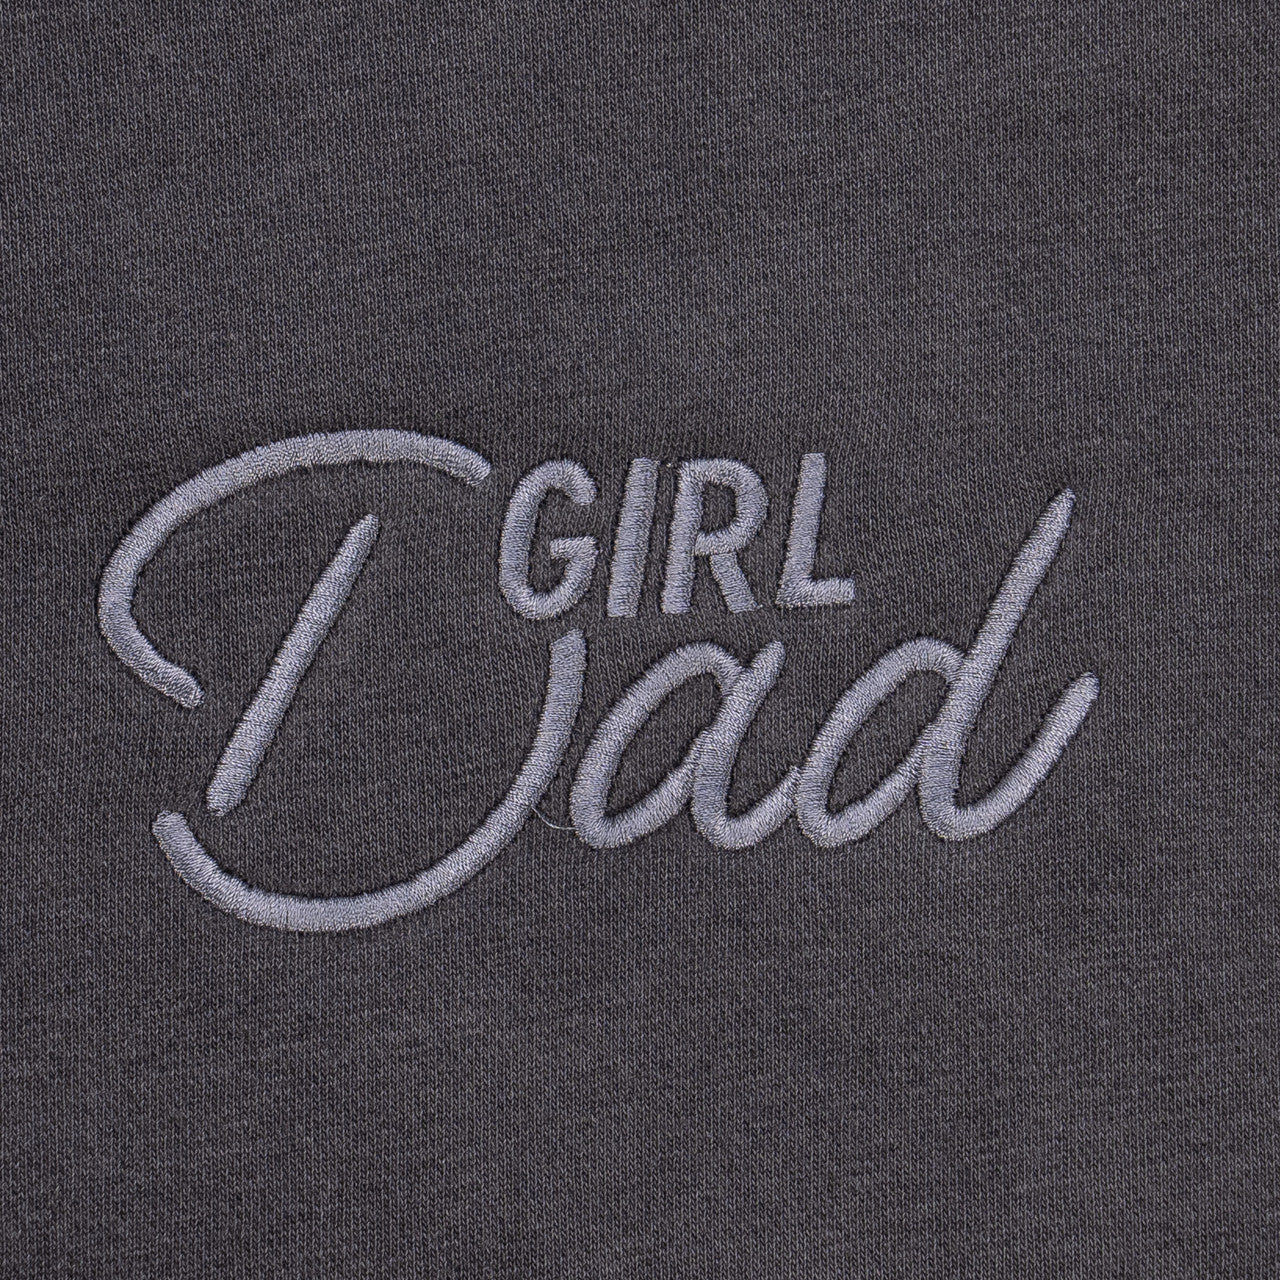 Girl Dad® (Ace, Pocket) - Embroidered Sweatshirt (Charcoal)